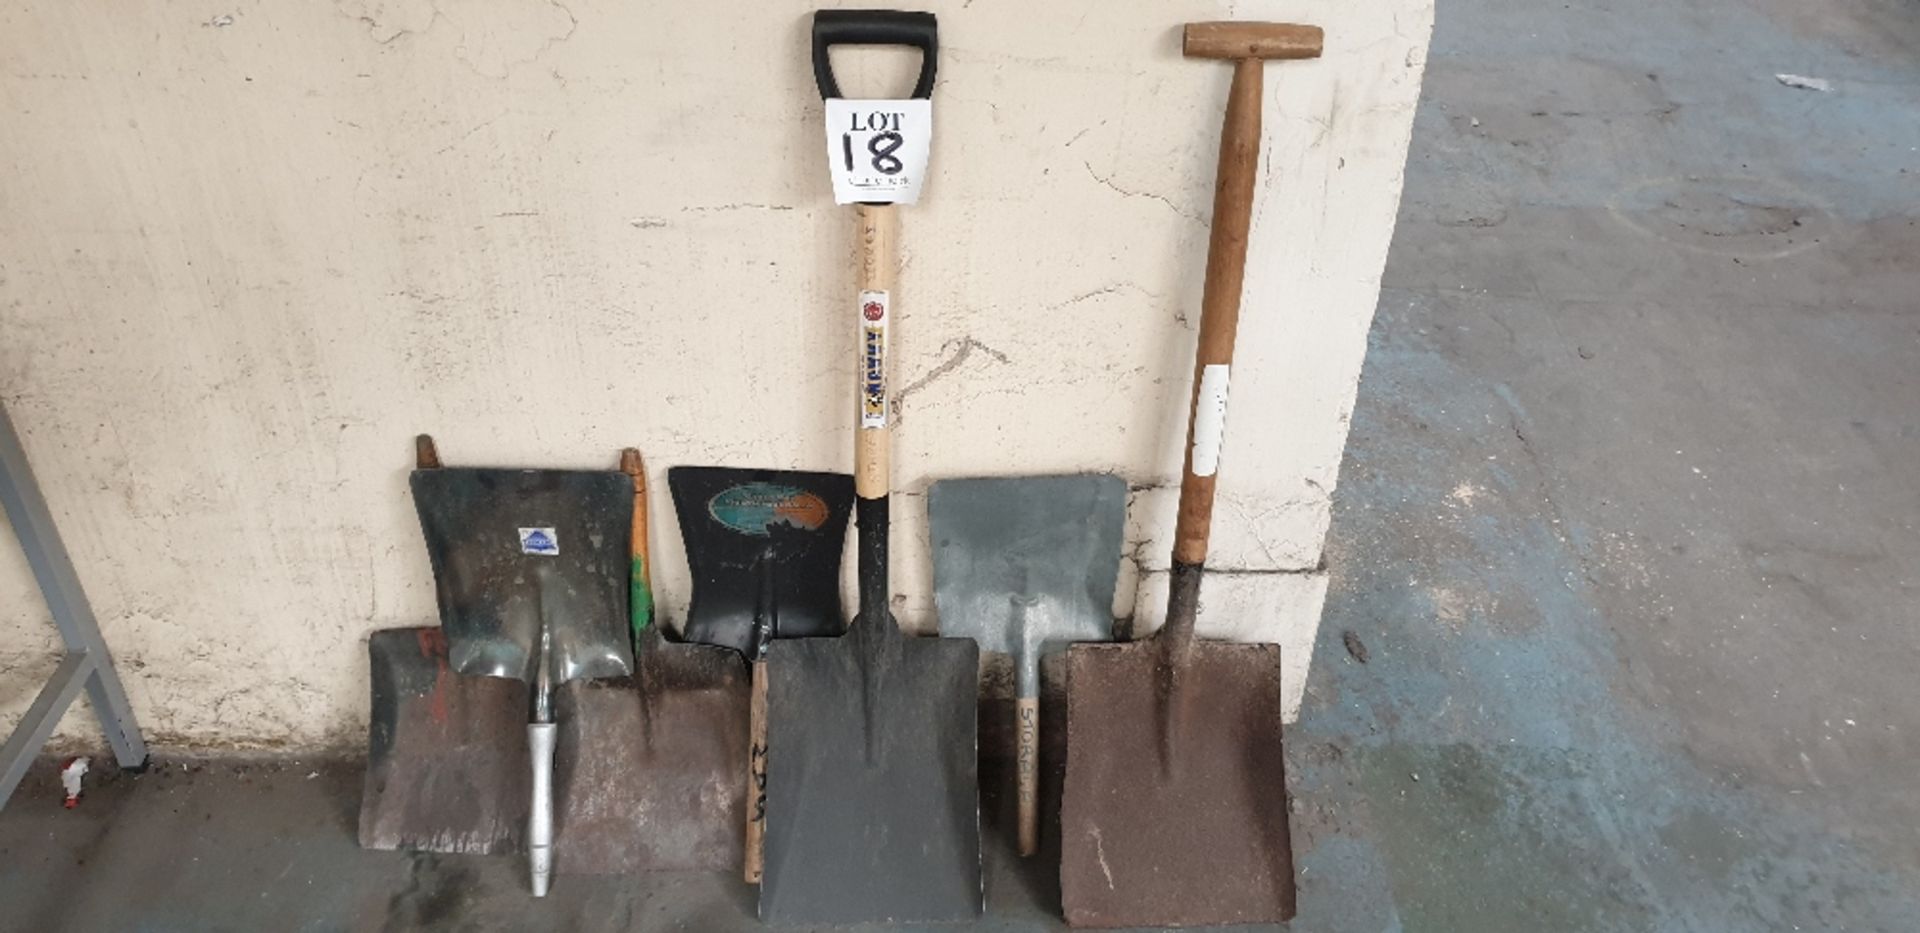 2 - shovels and 5 - hand shovels